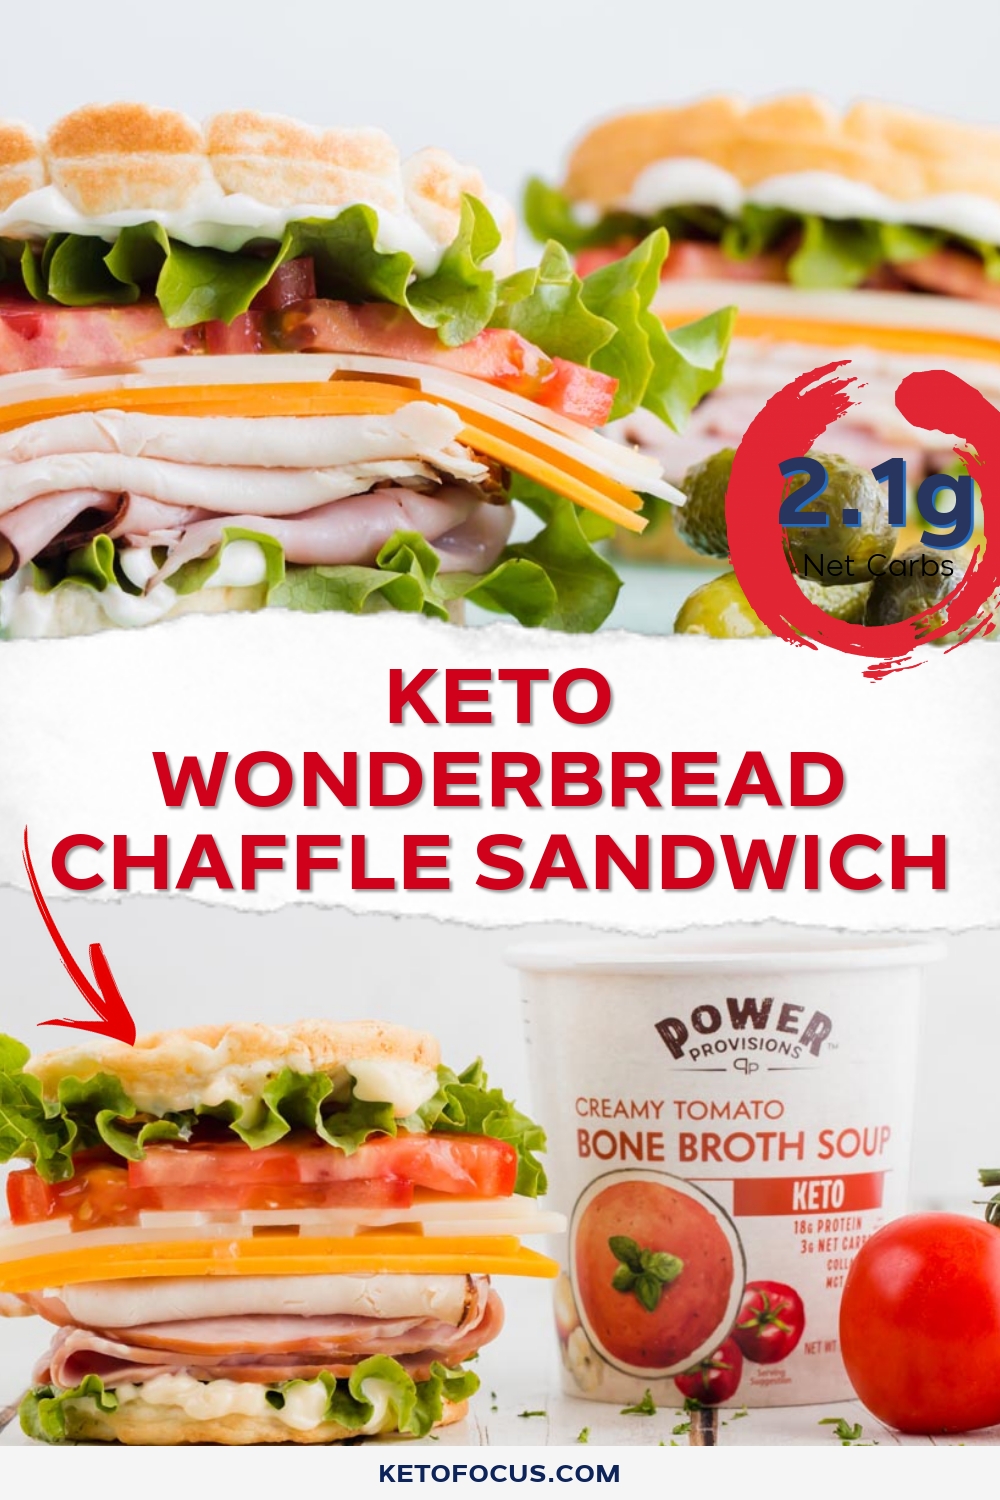 Keto Wonderbread Chaffle Sandwich